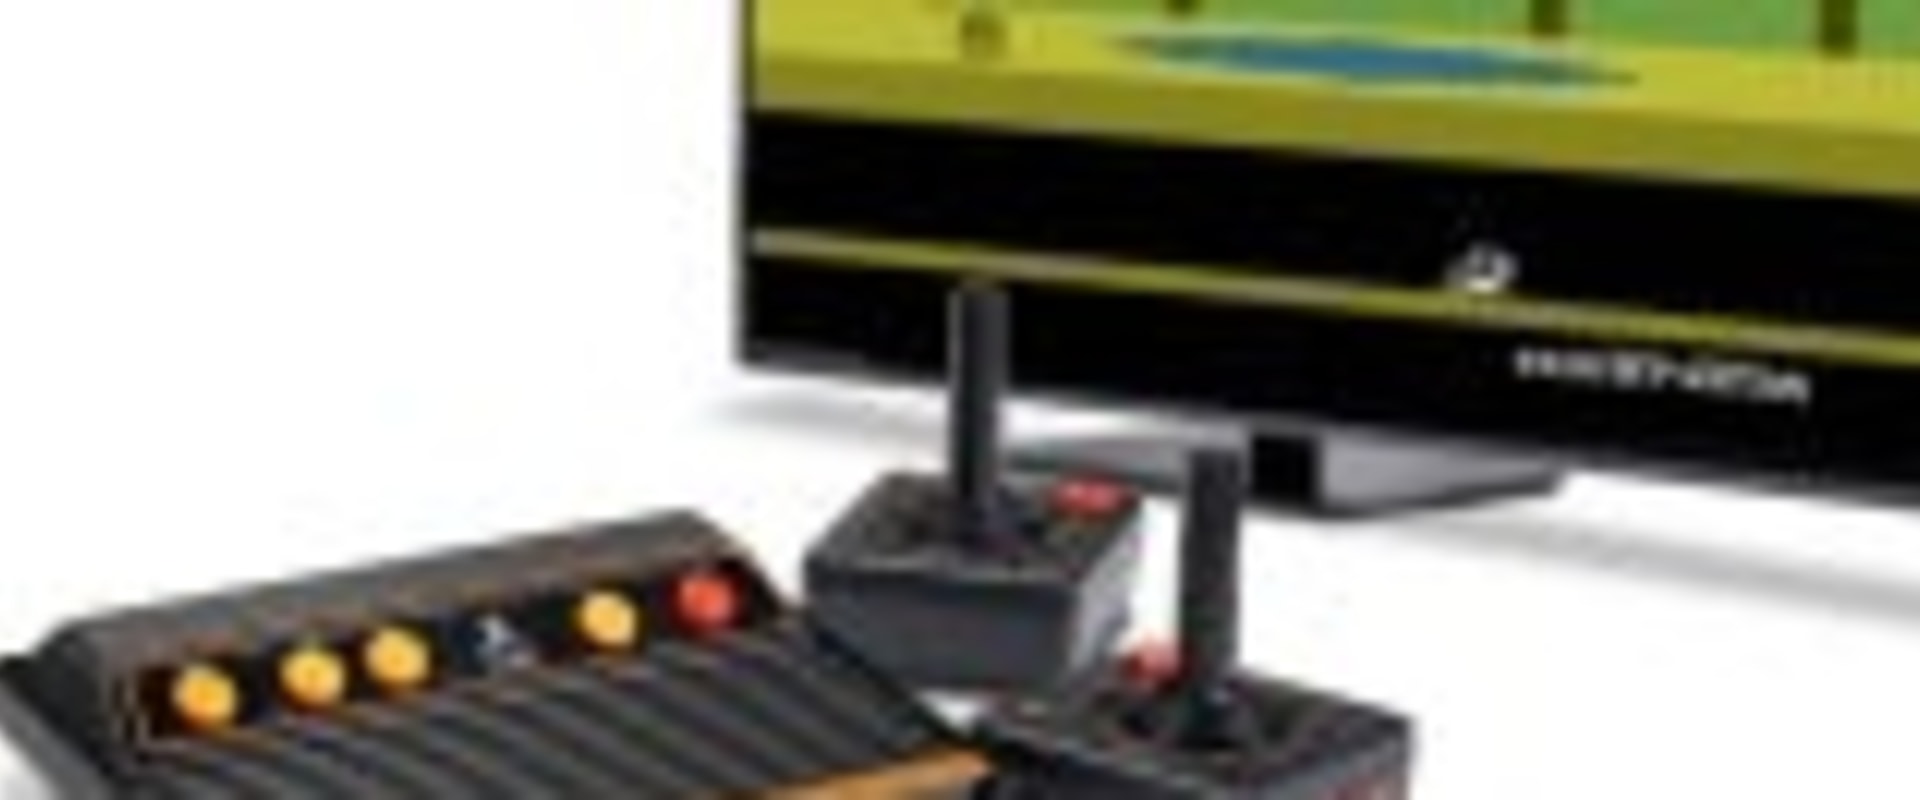 Atari 2600: A Retrospective Look at the Classic Console